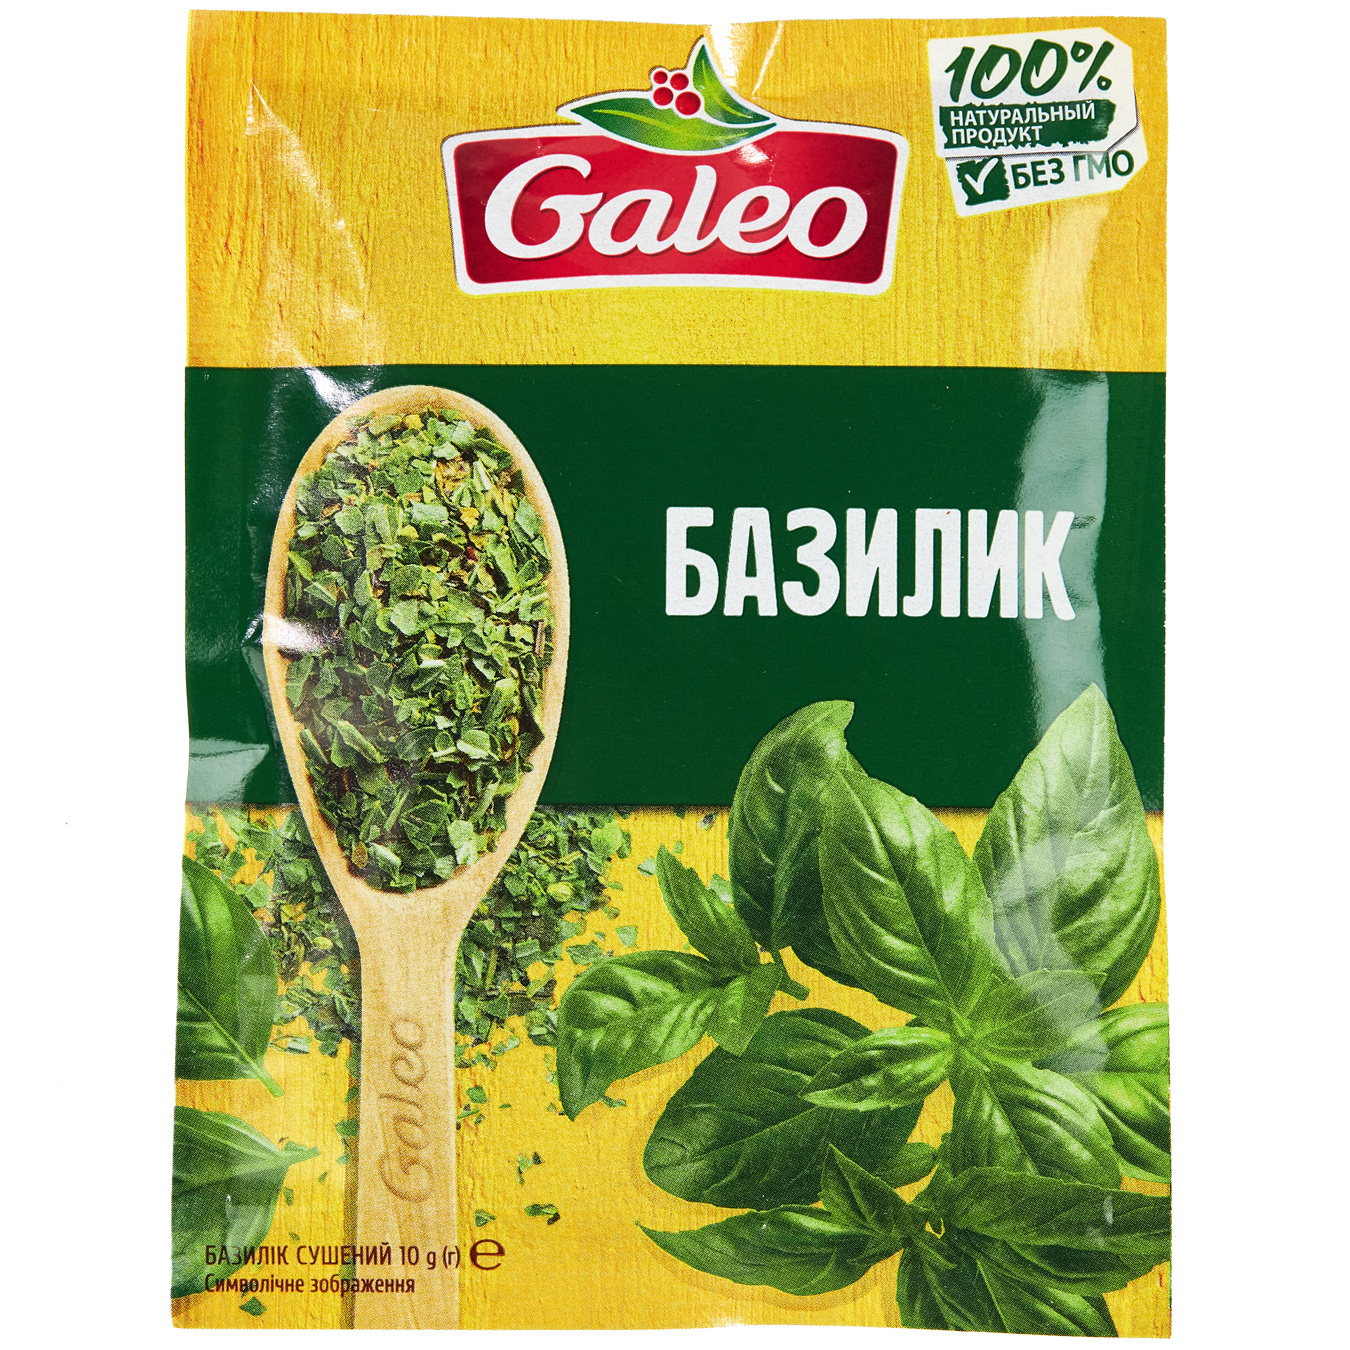 Galeo Dried Basil Seasoning 10g